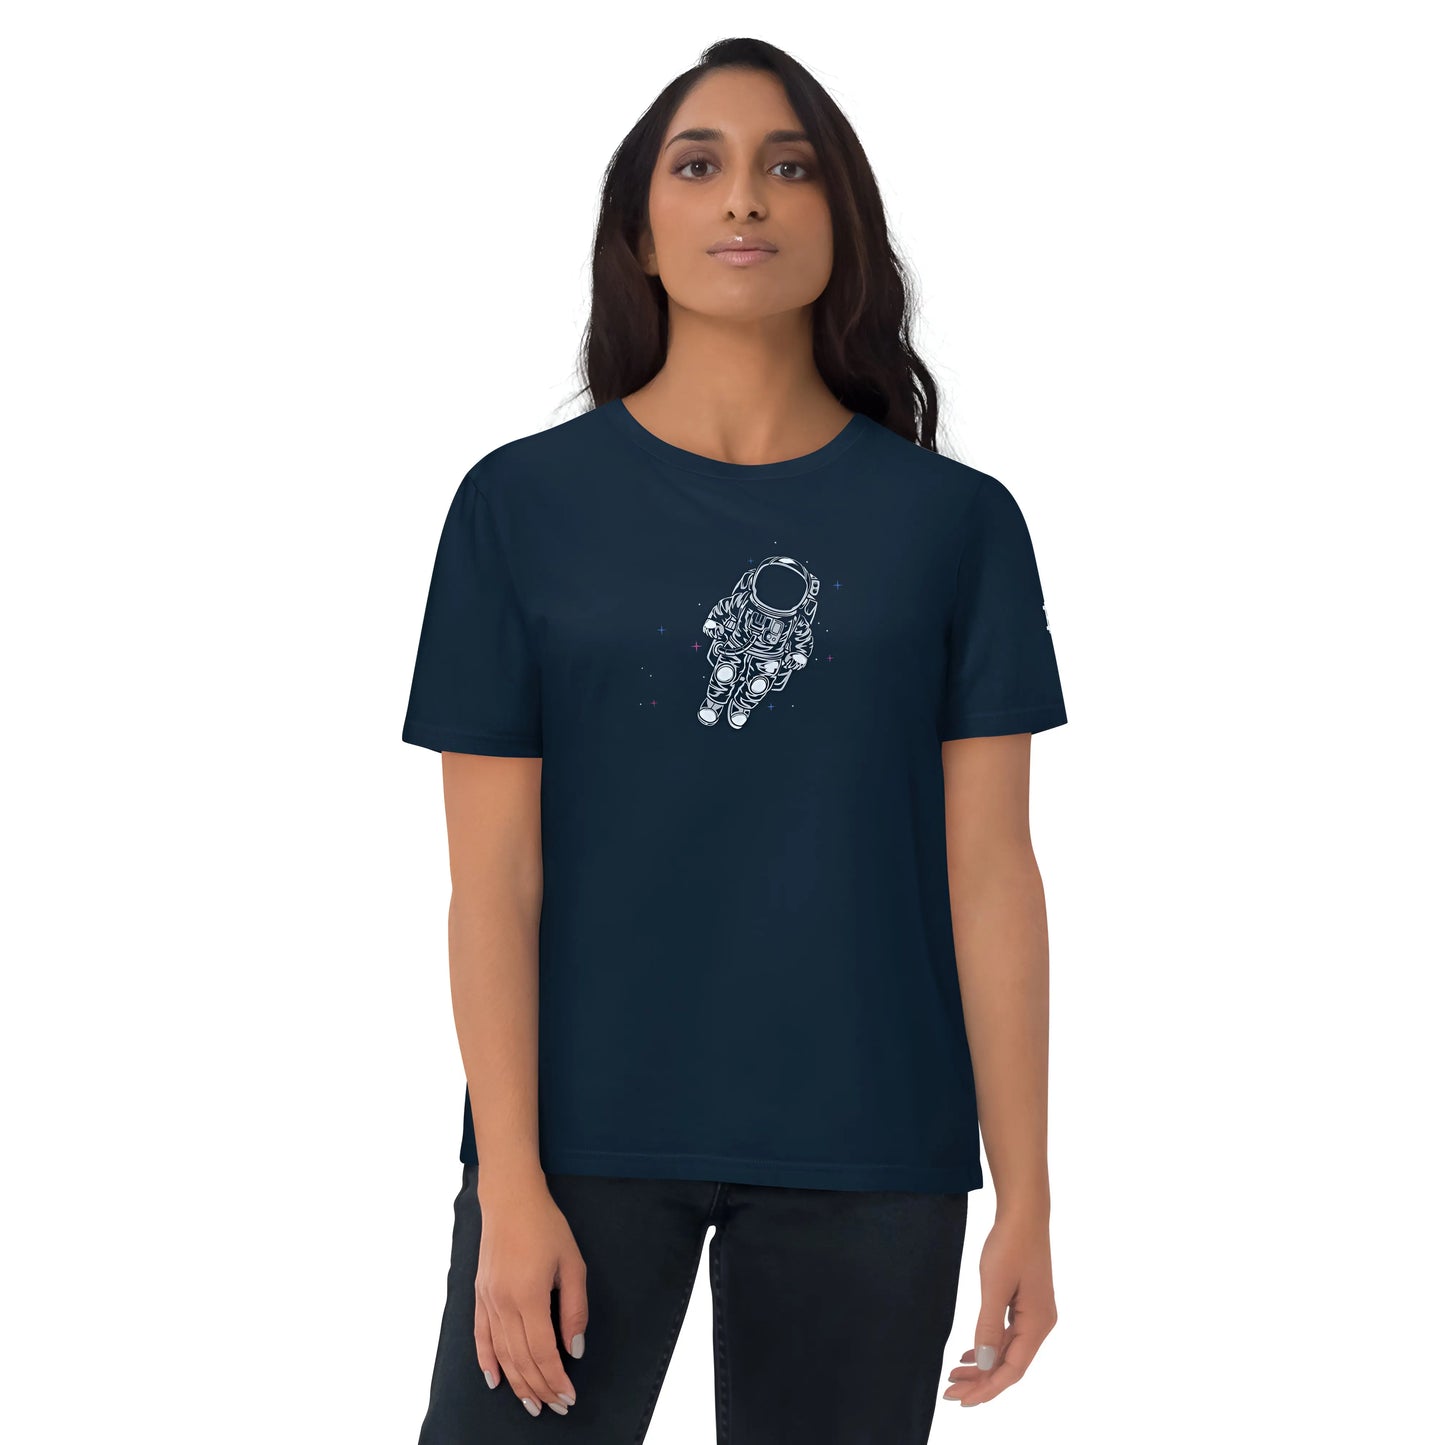 Bitcoin Space Astronaut - Premium Unisex Organic Cotton Bitcoin T-shirt French Navy